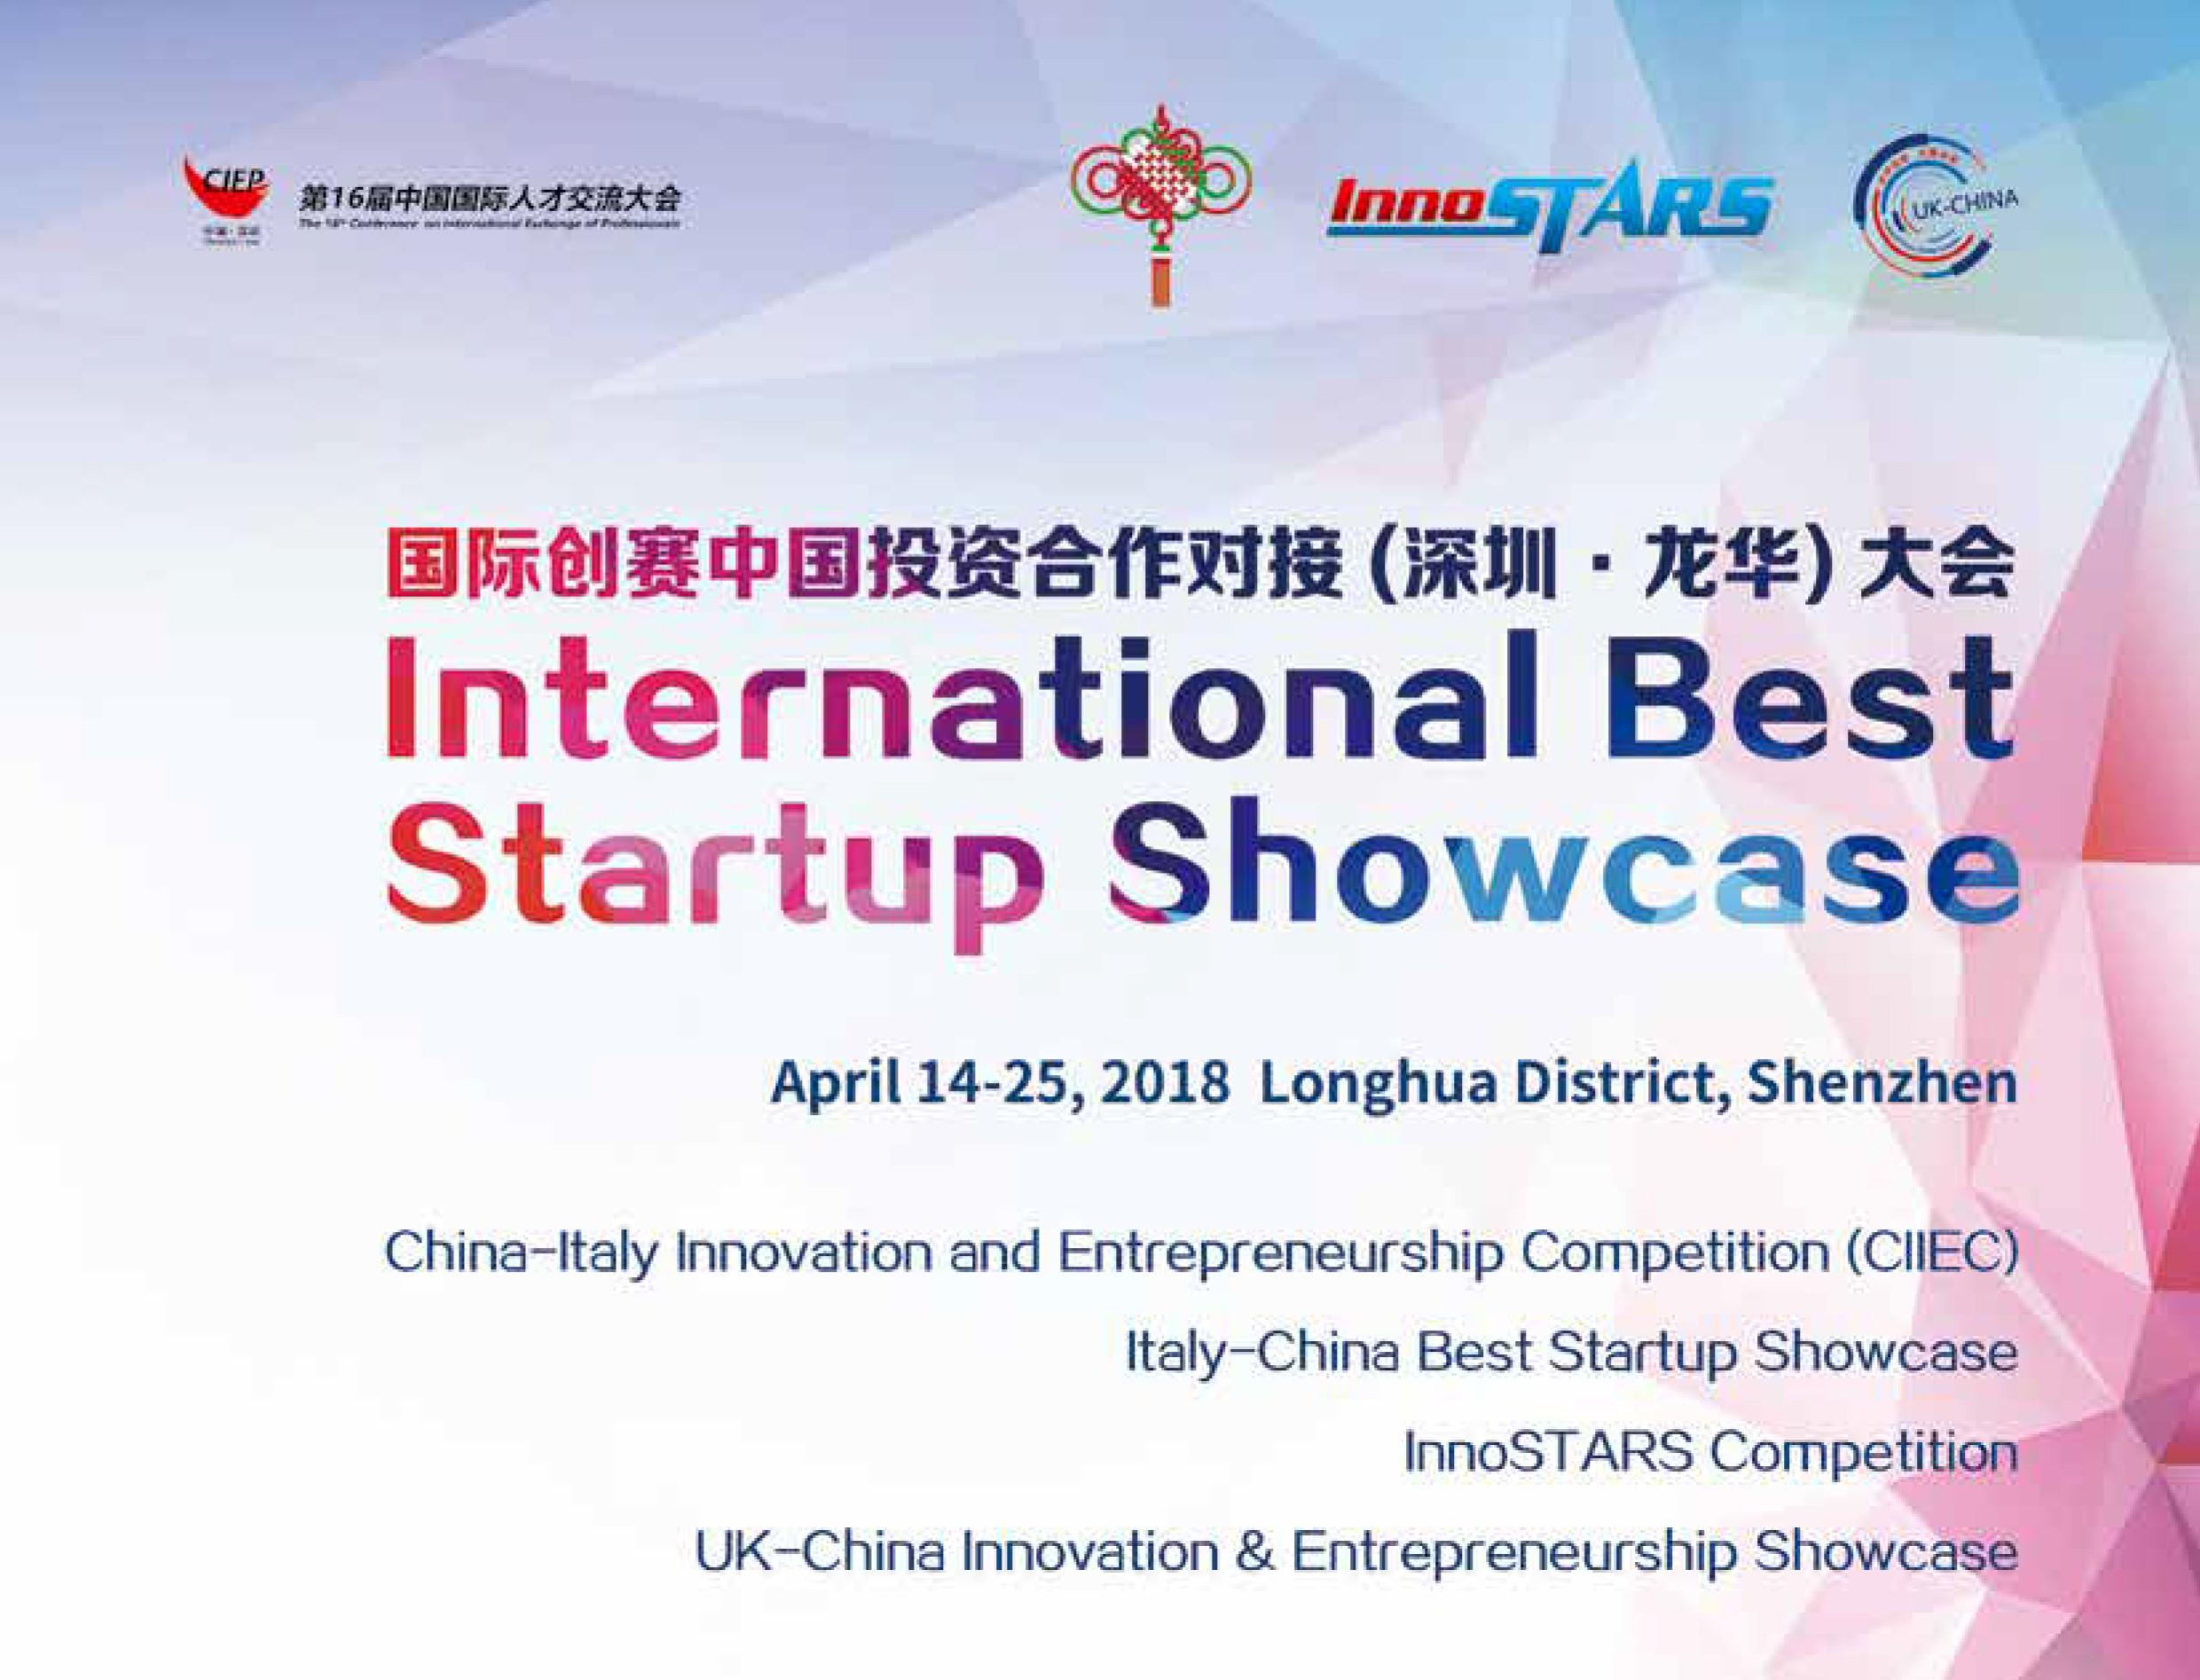 ittn-international-best-startup-showcase-announcement-1